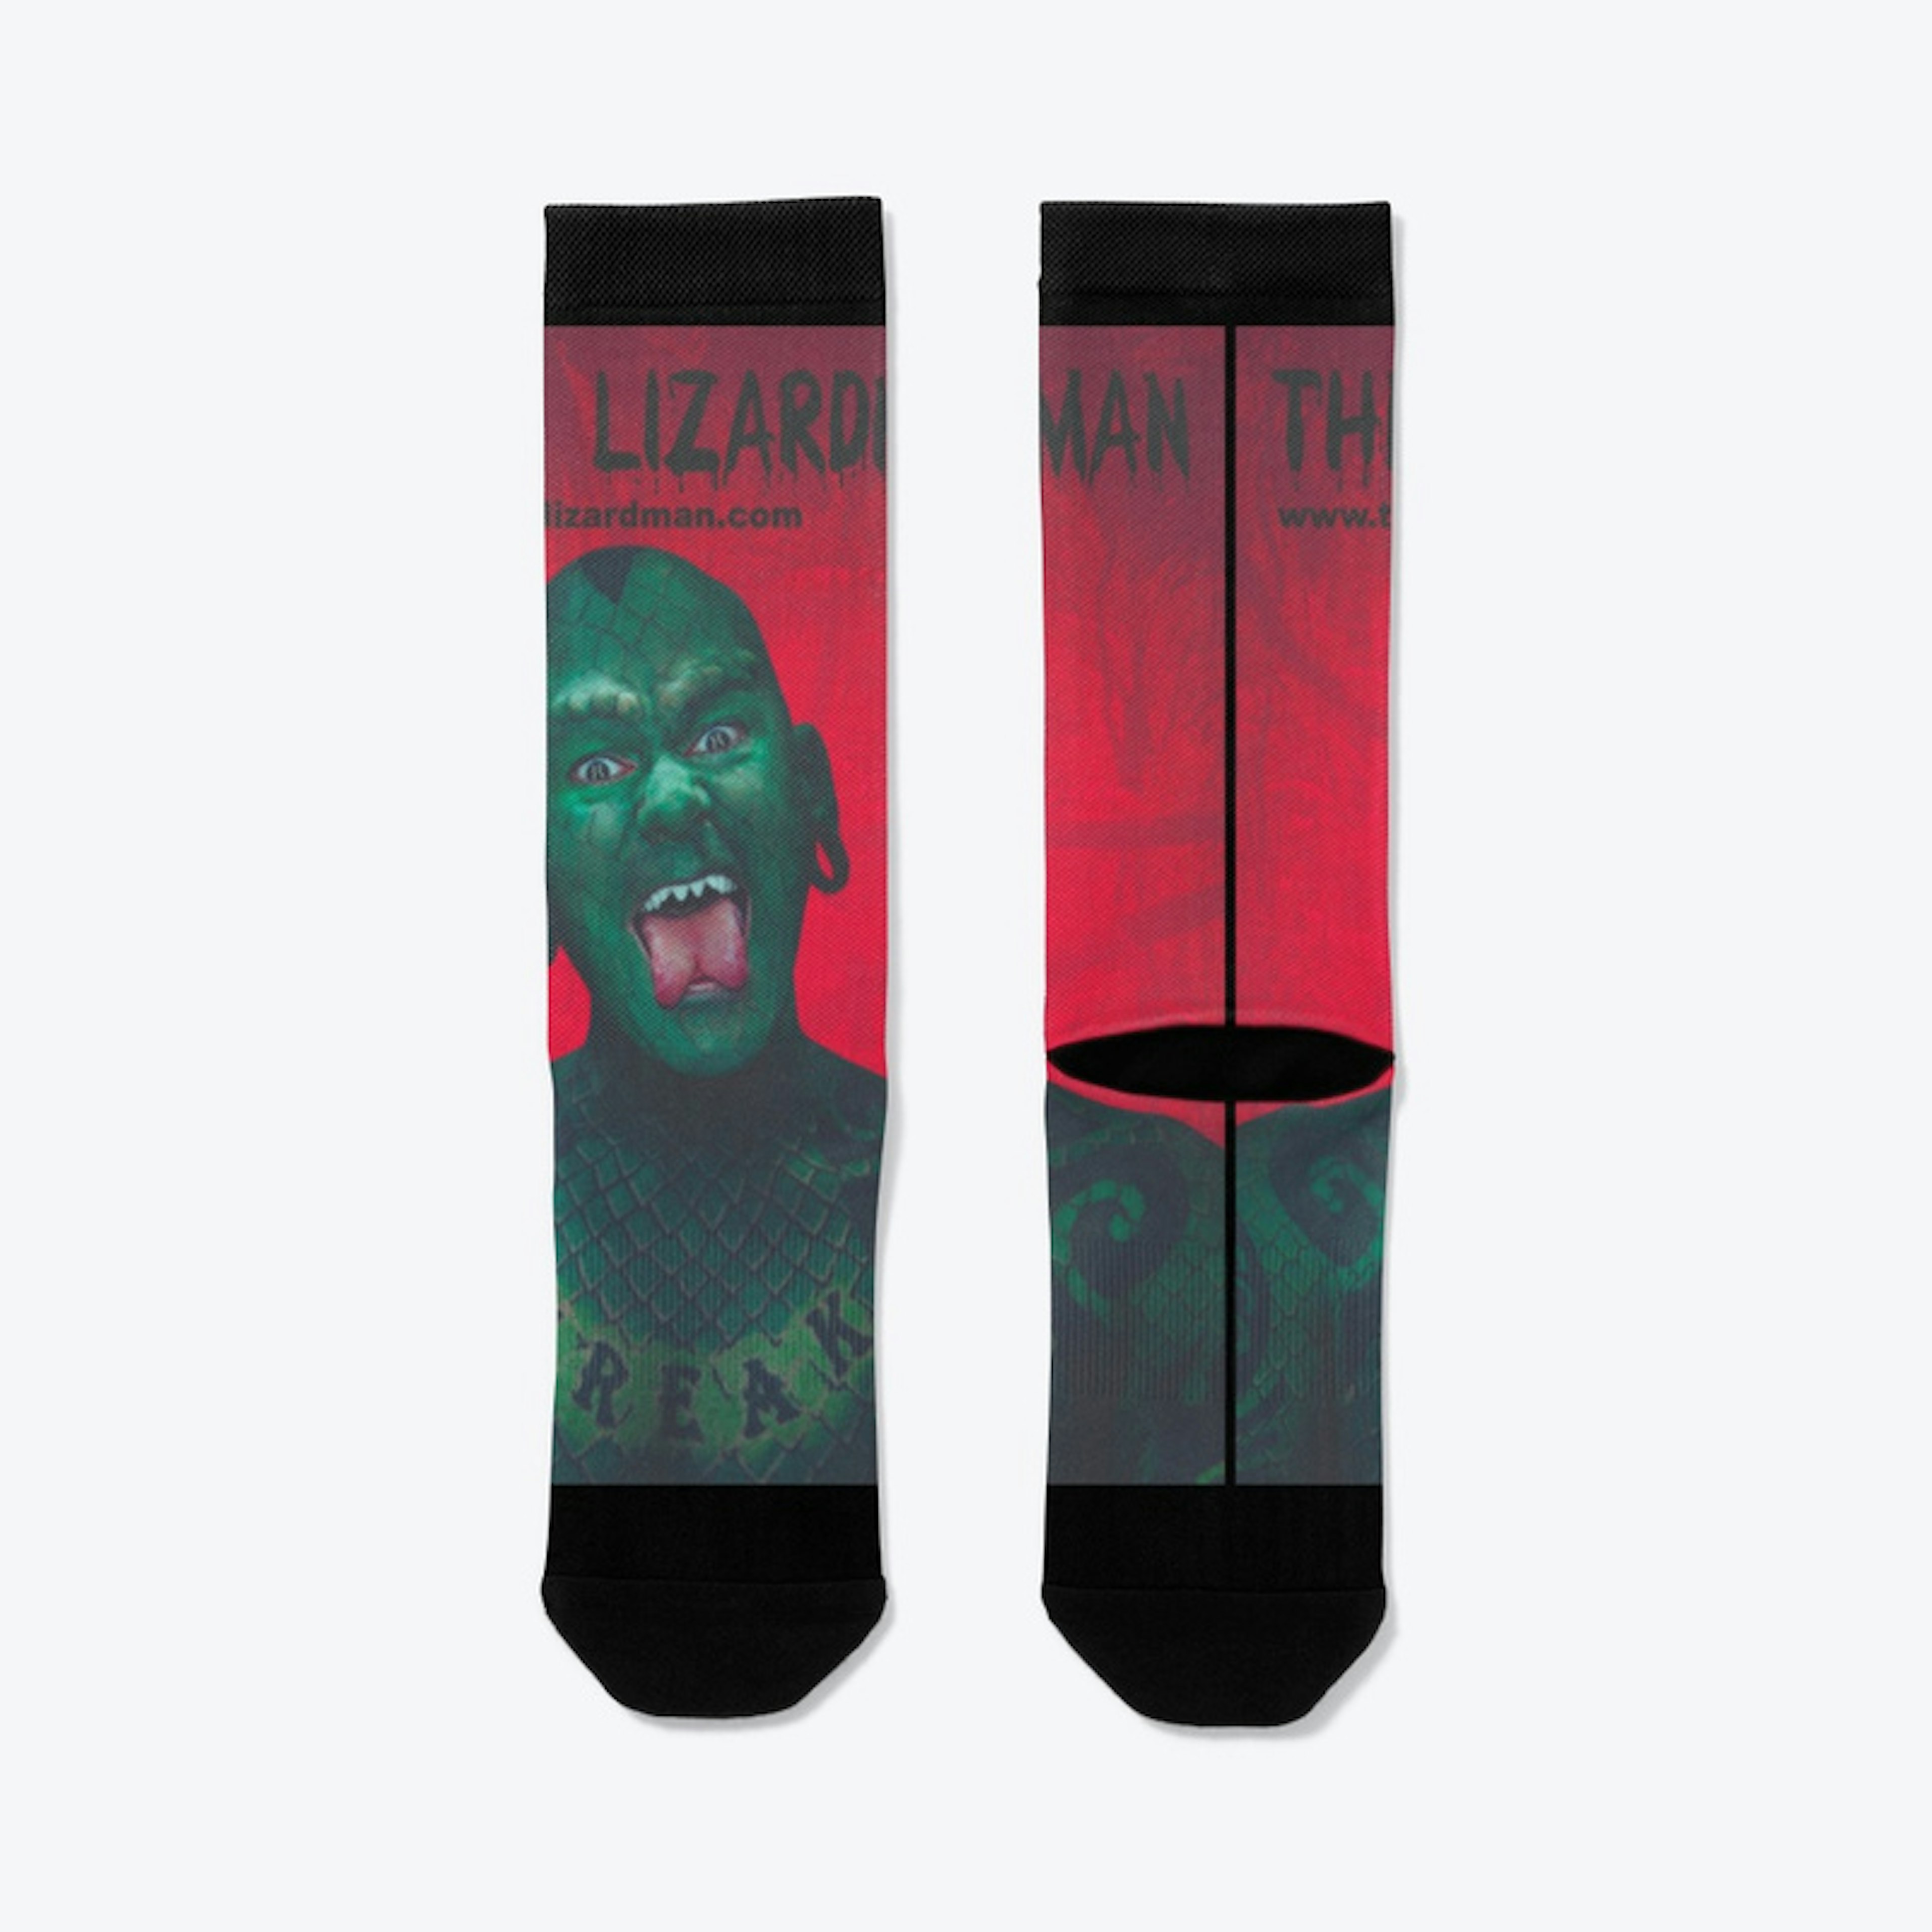 The Lizardman Socks